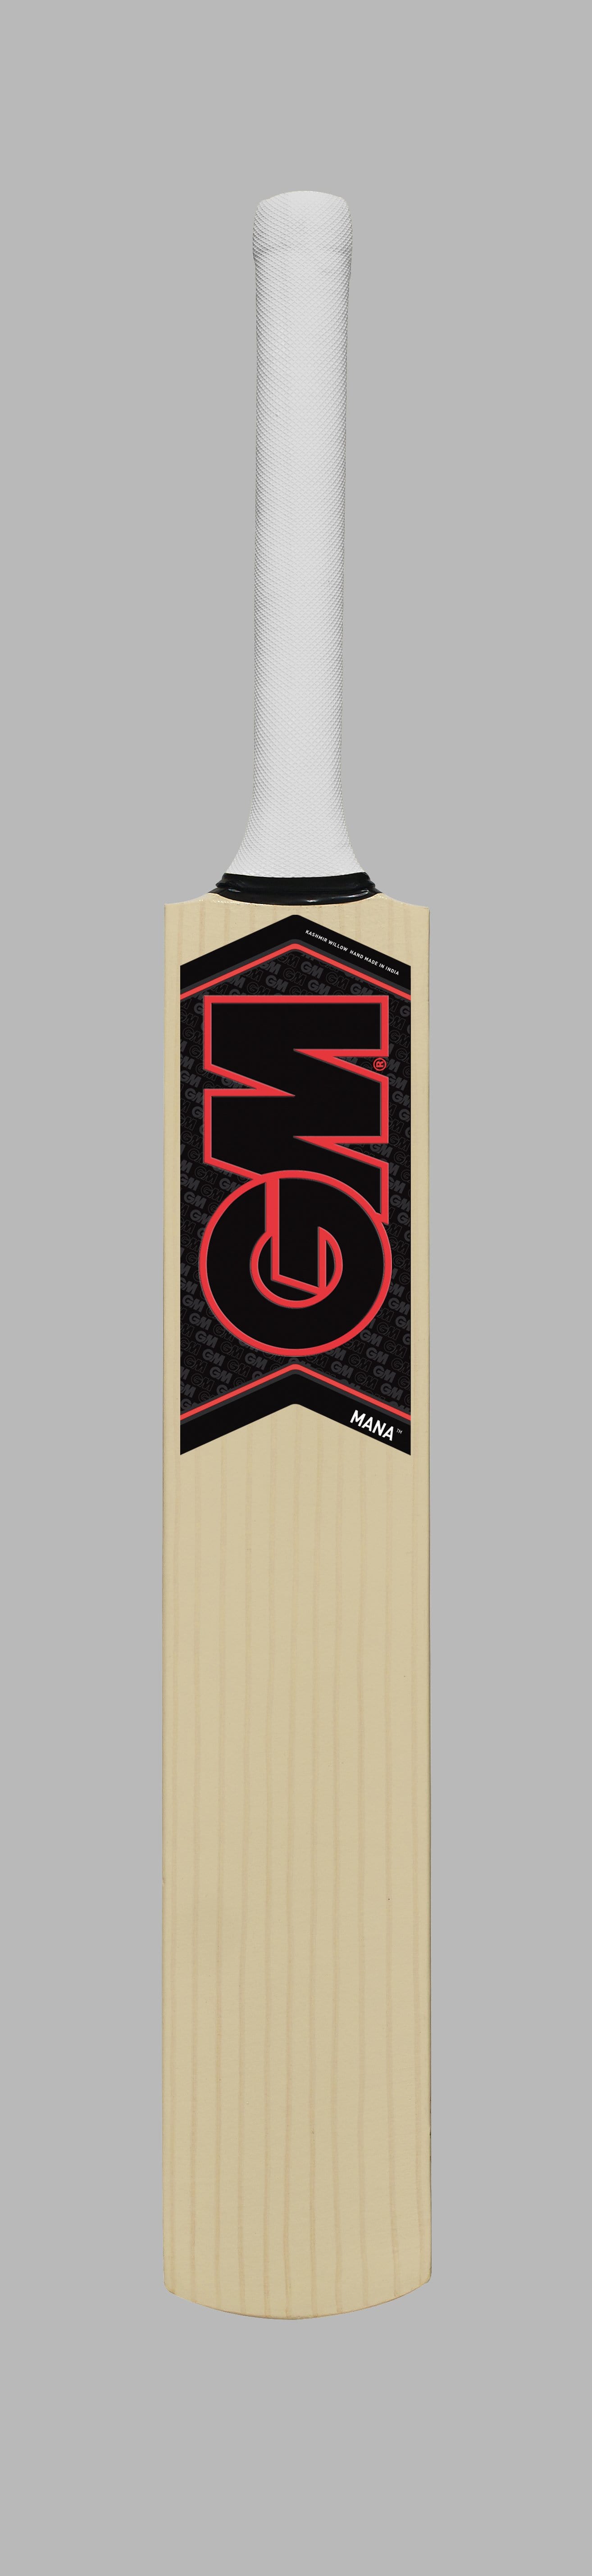 Gunn & Moore Cricket Bats GM Mana 101 Junior Cricket Bat